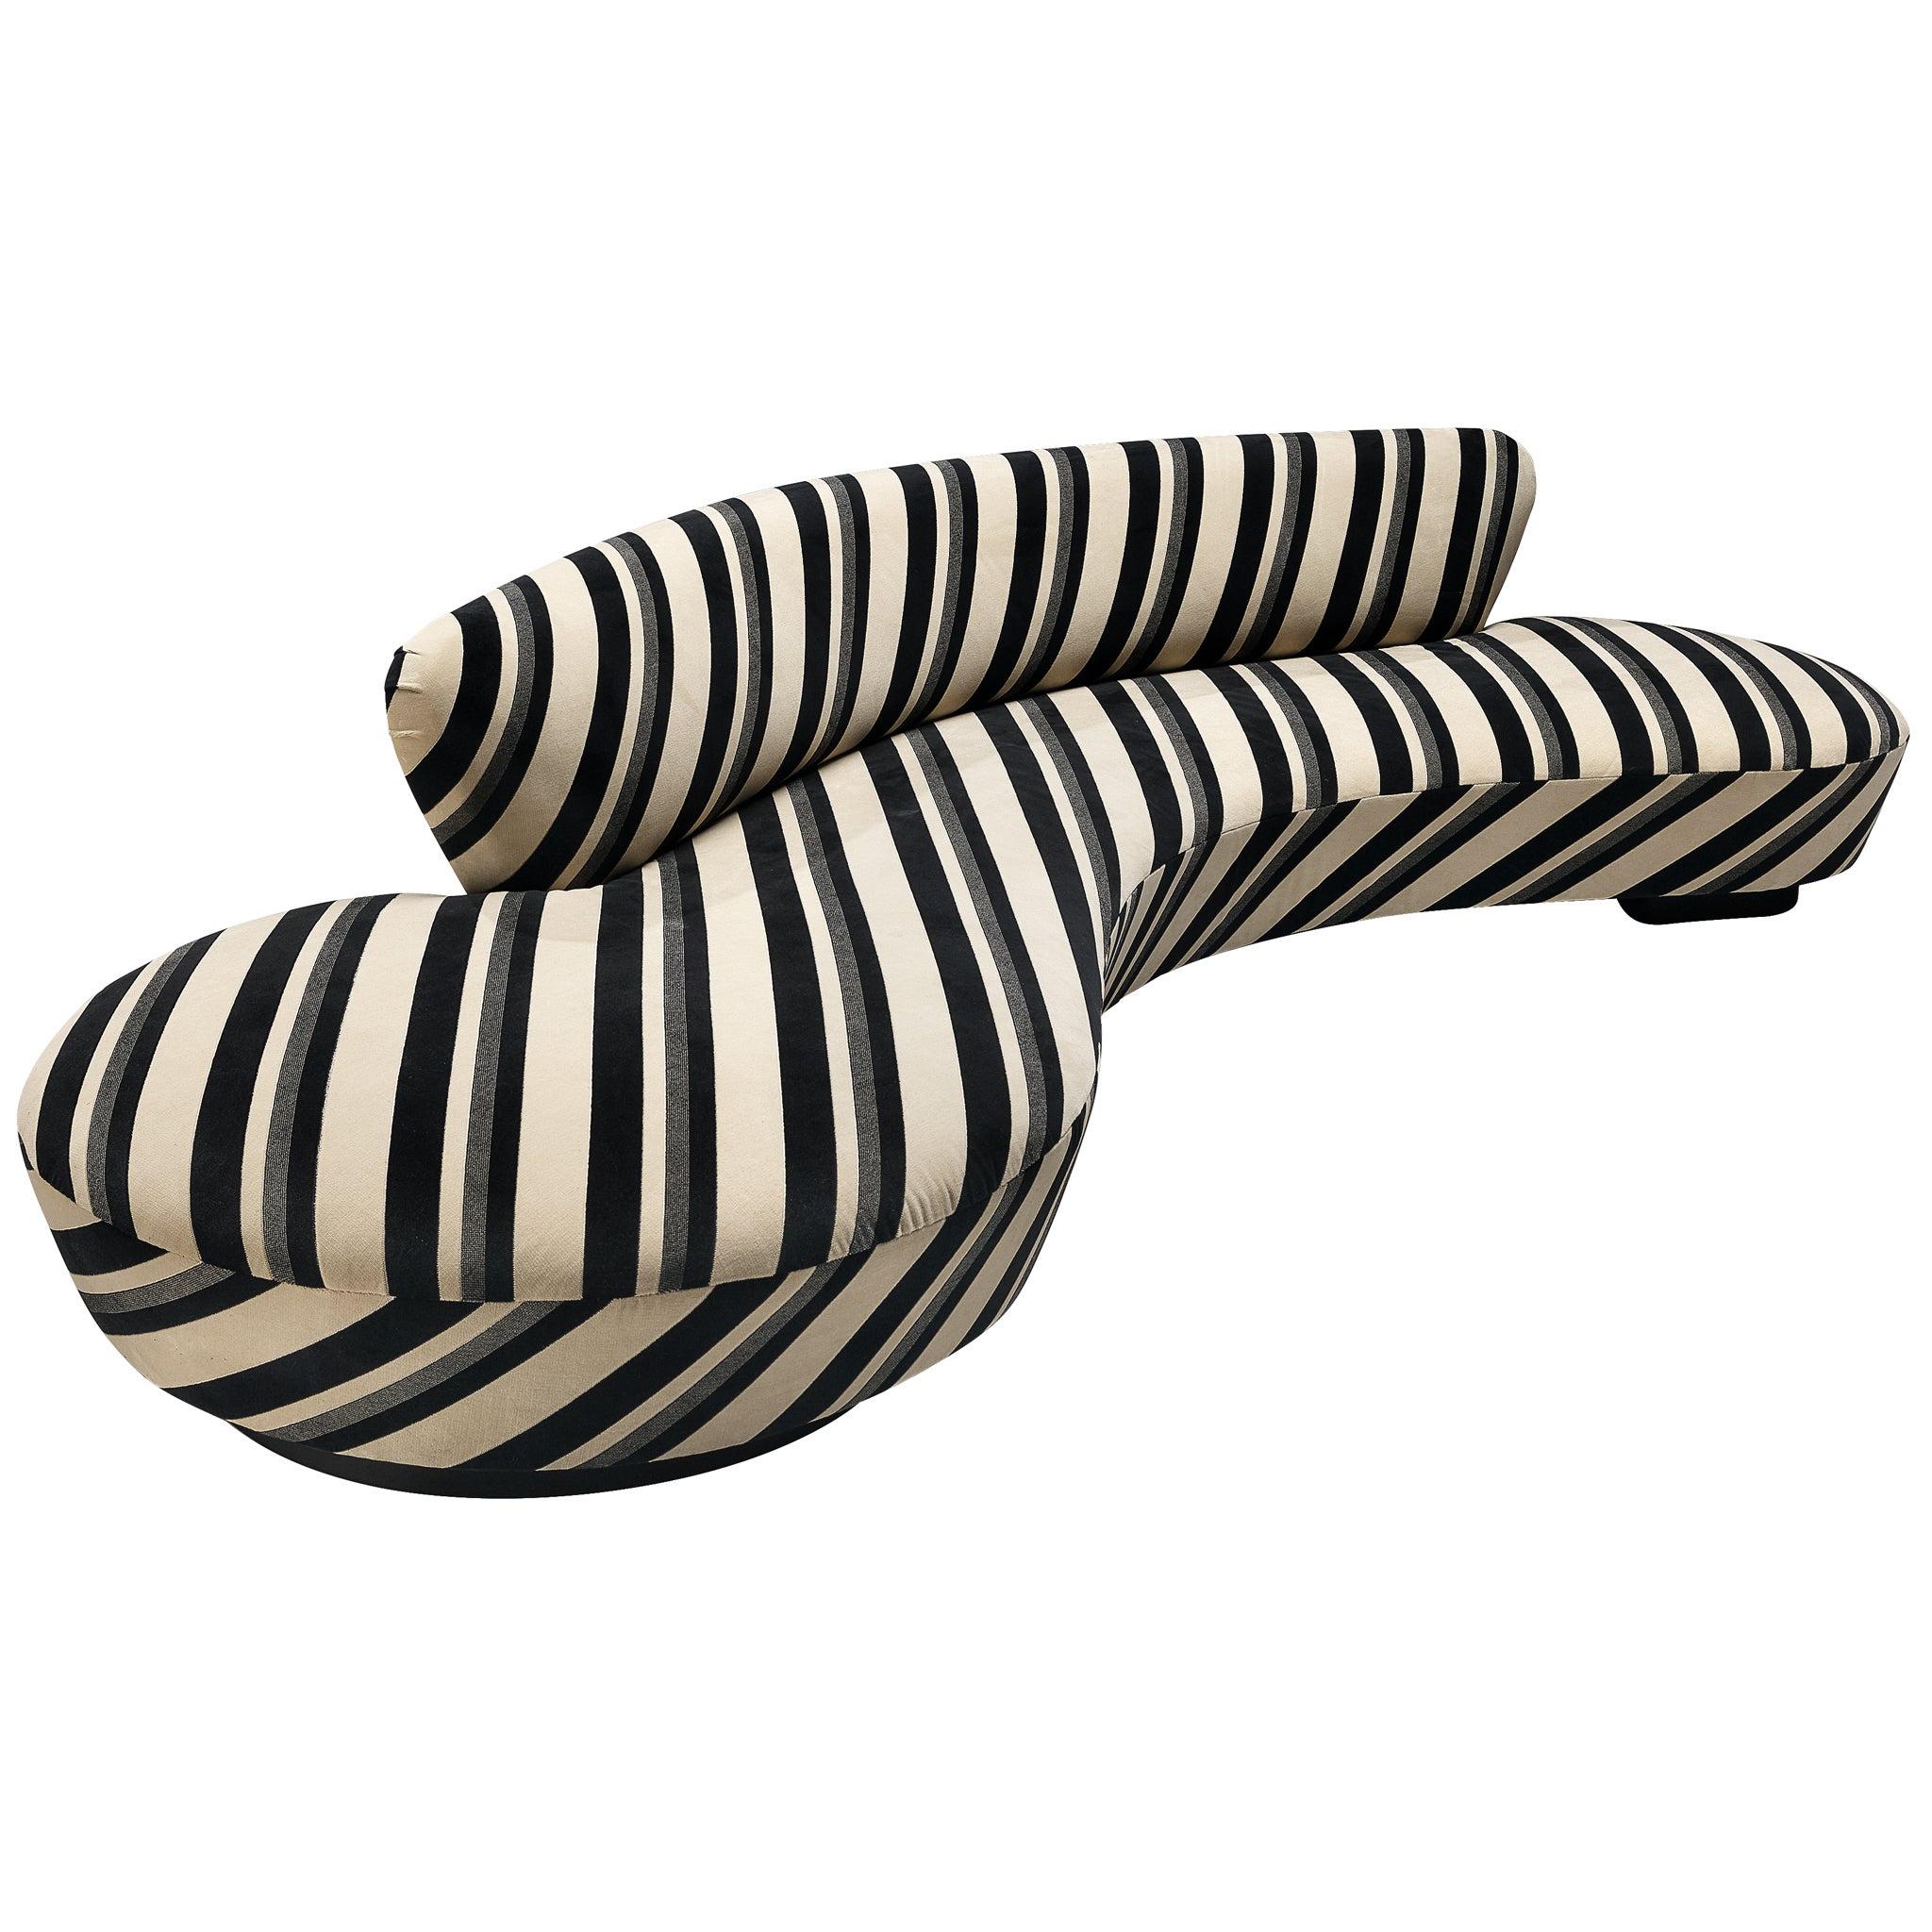 Iconic Vladimir Kagan 'Serpentine' Sofa in Striped Upholstery